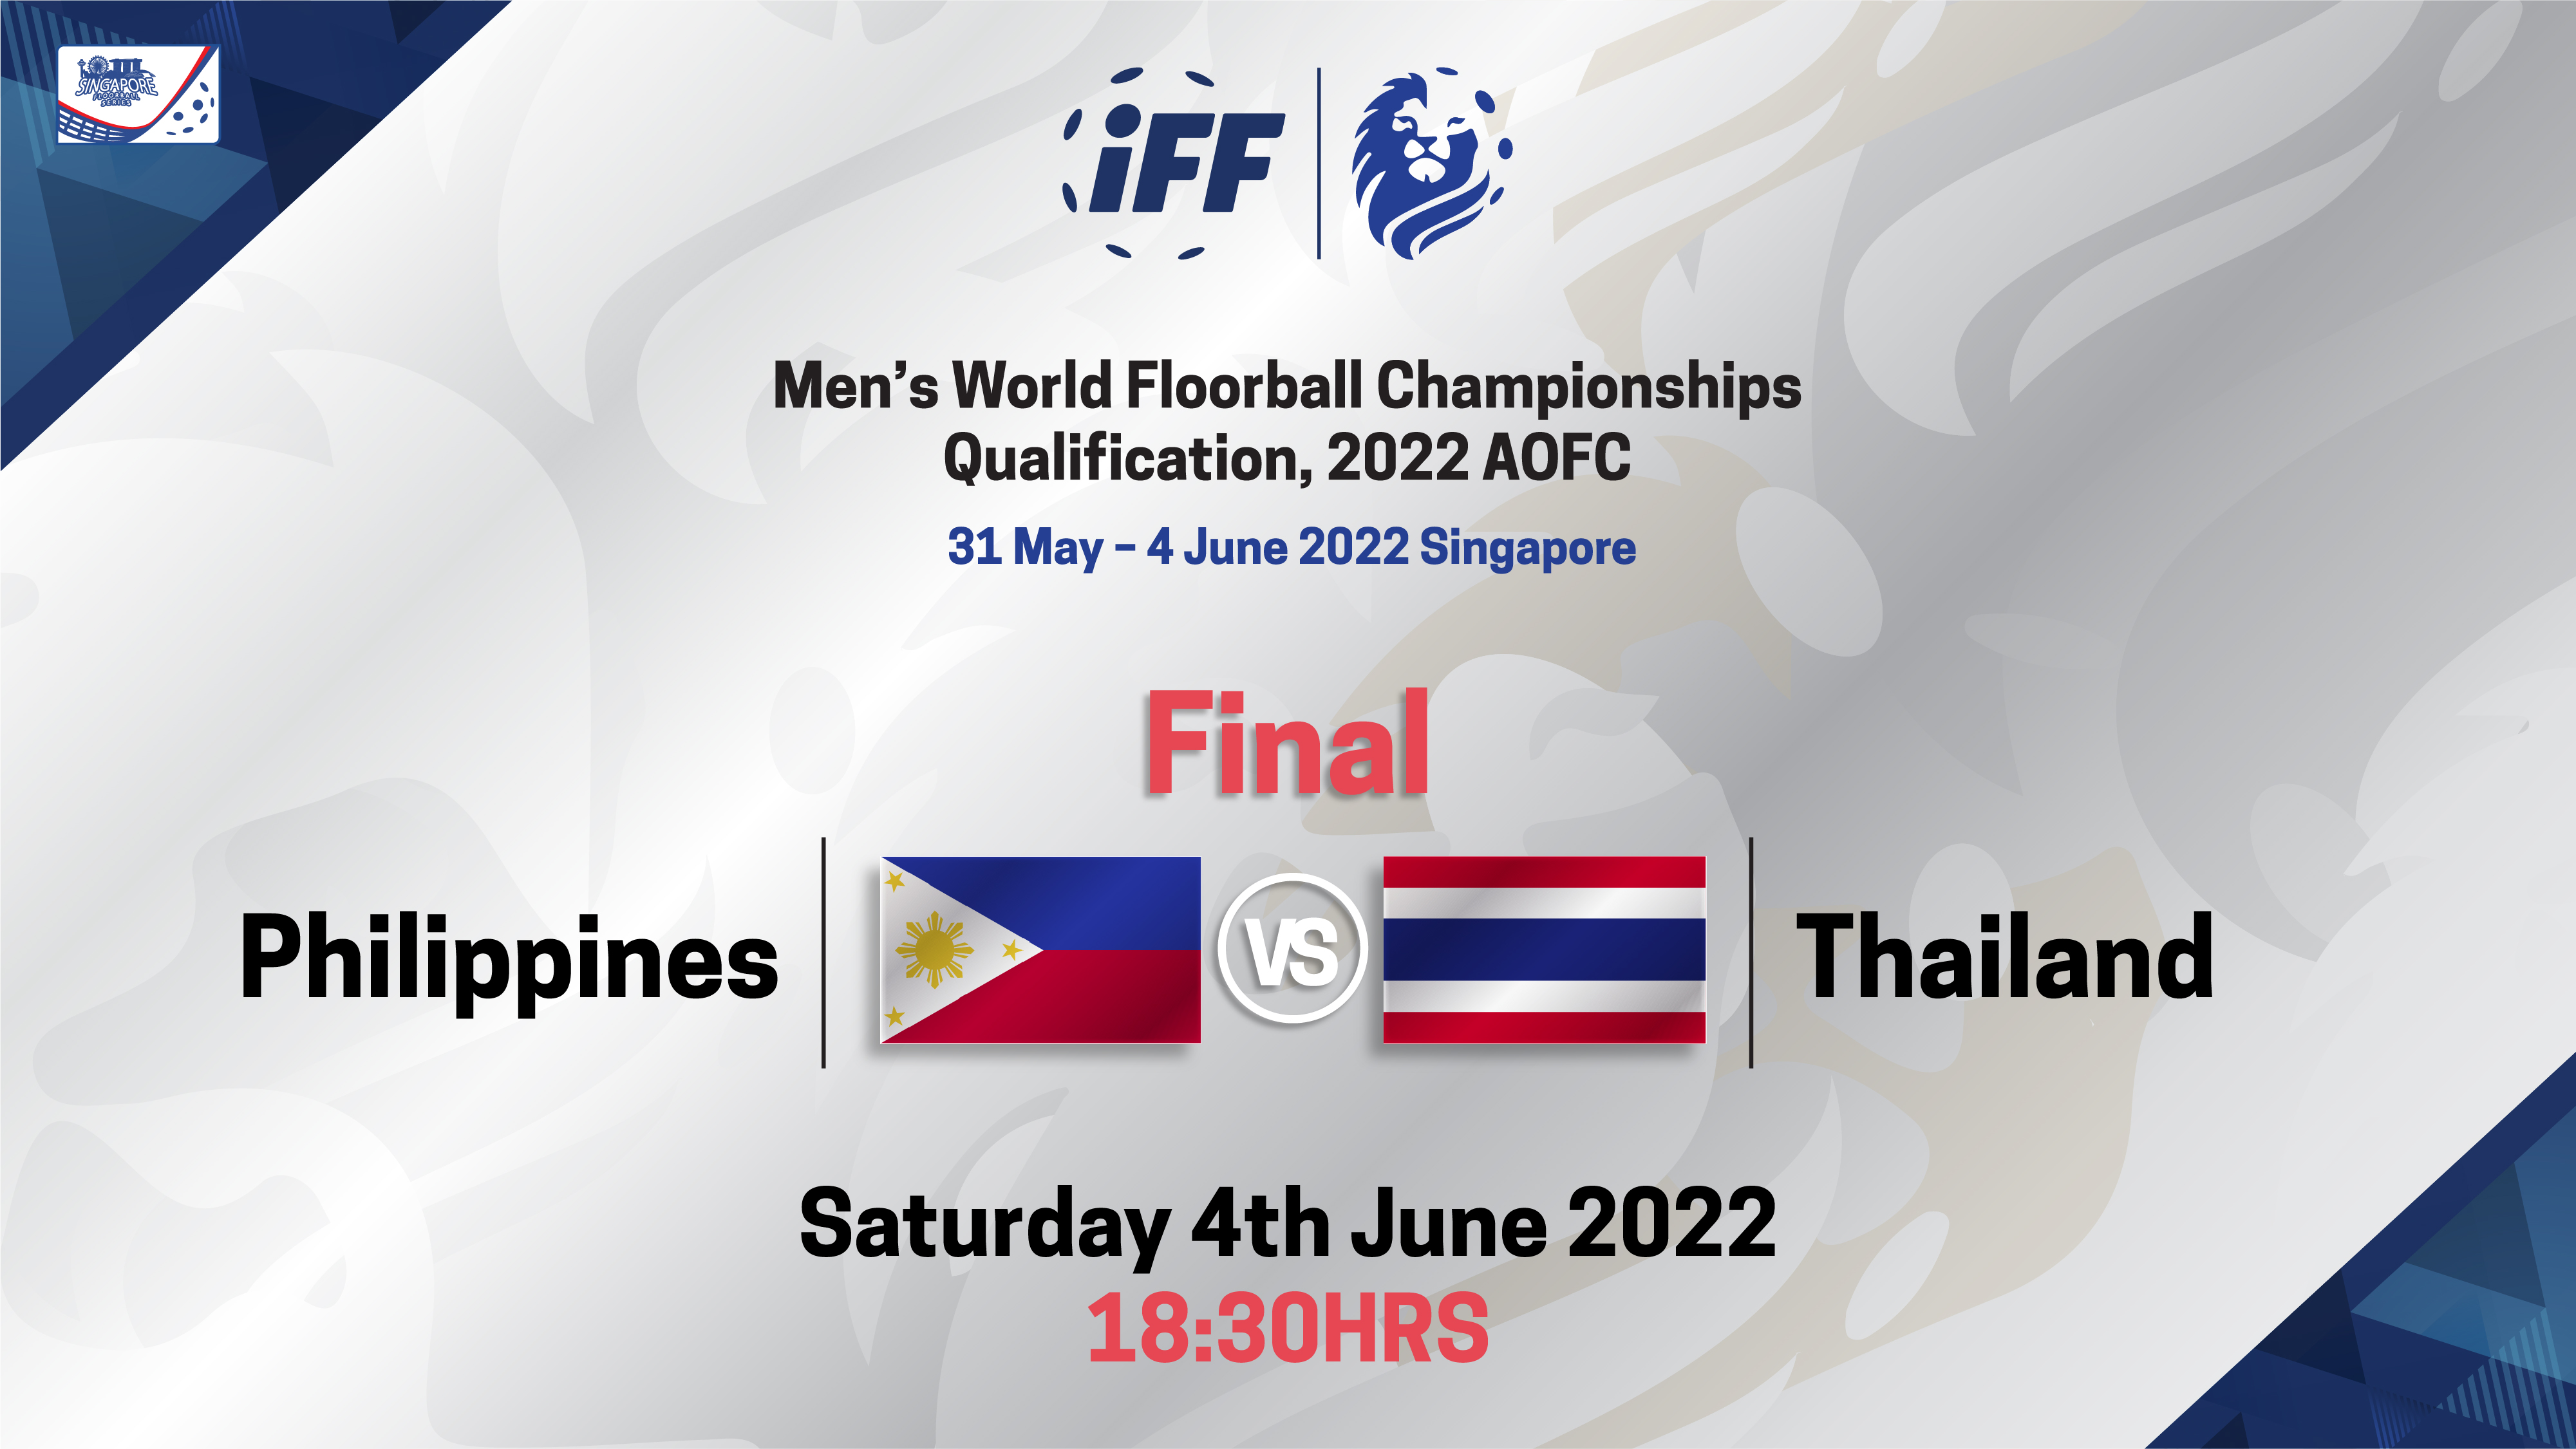 IFF Men's World Floorball Championship Qualifications 2022 - Final - Philippines vs Thailand